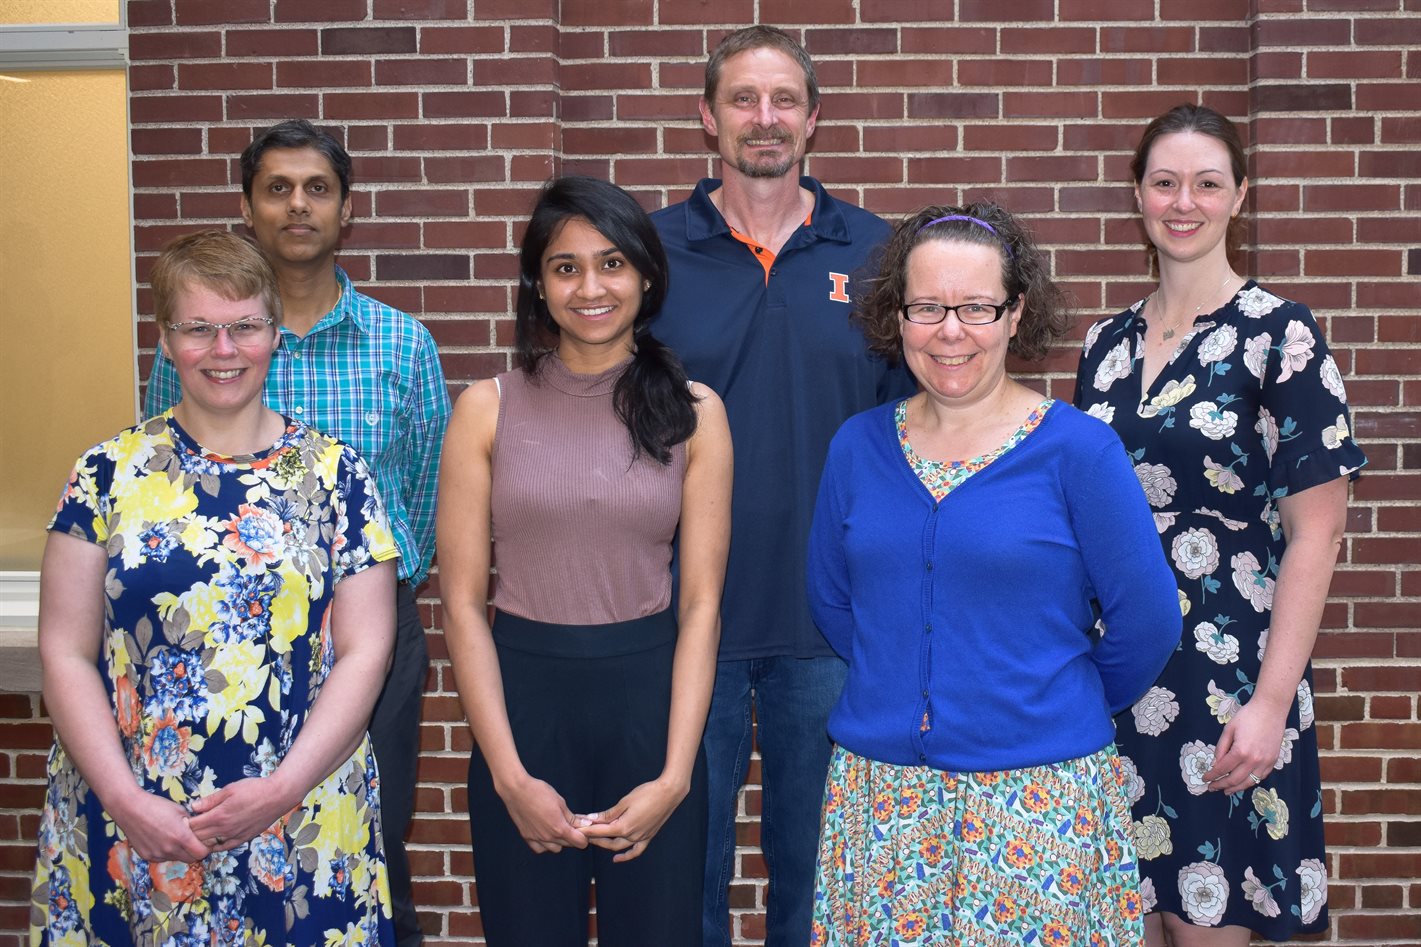 Members of the GIANT team. Back row, left to right: Chandra&nbsp;Radhakrishnan (ECE), Chris Schmitz (ECE), Katie Ansell (Physics). Front row, left to right: Jessica TerBush (Materials Science), Akshara Subramaniasivam (Statistics graduate student), Rebecca Reck (BIOE)